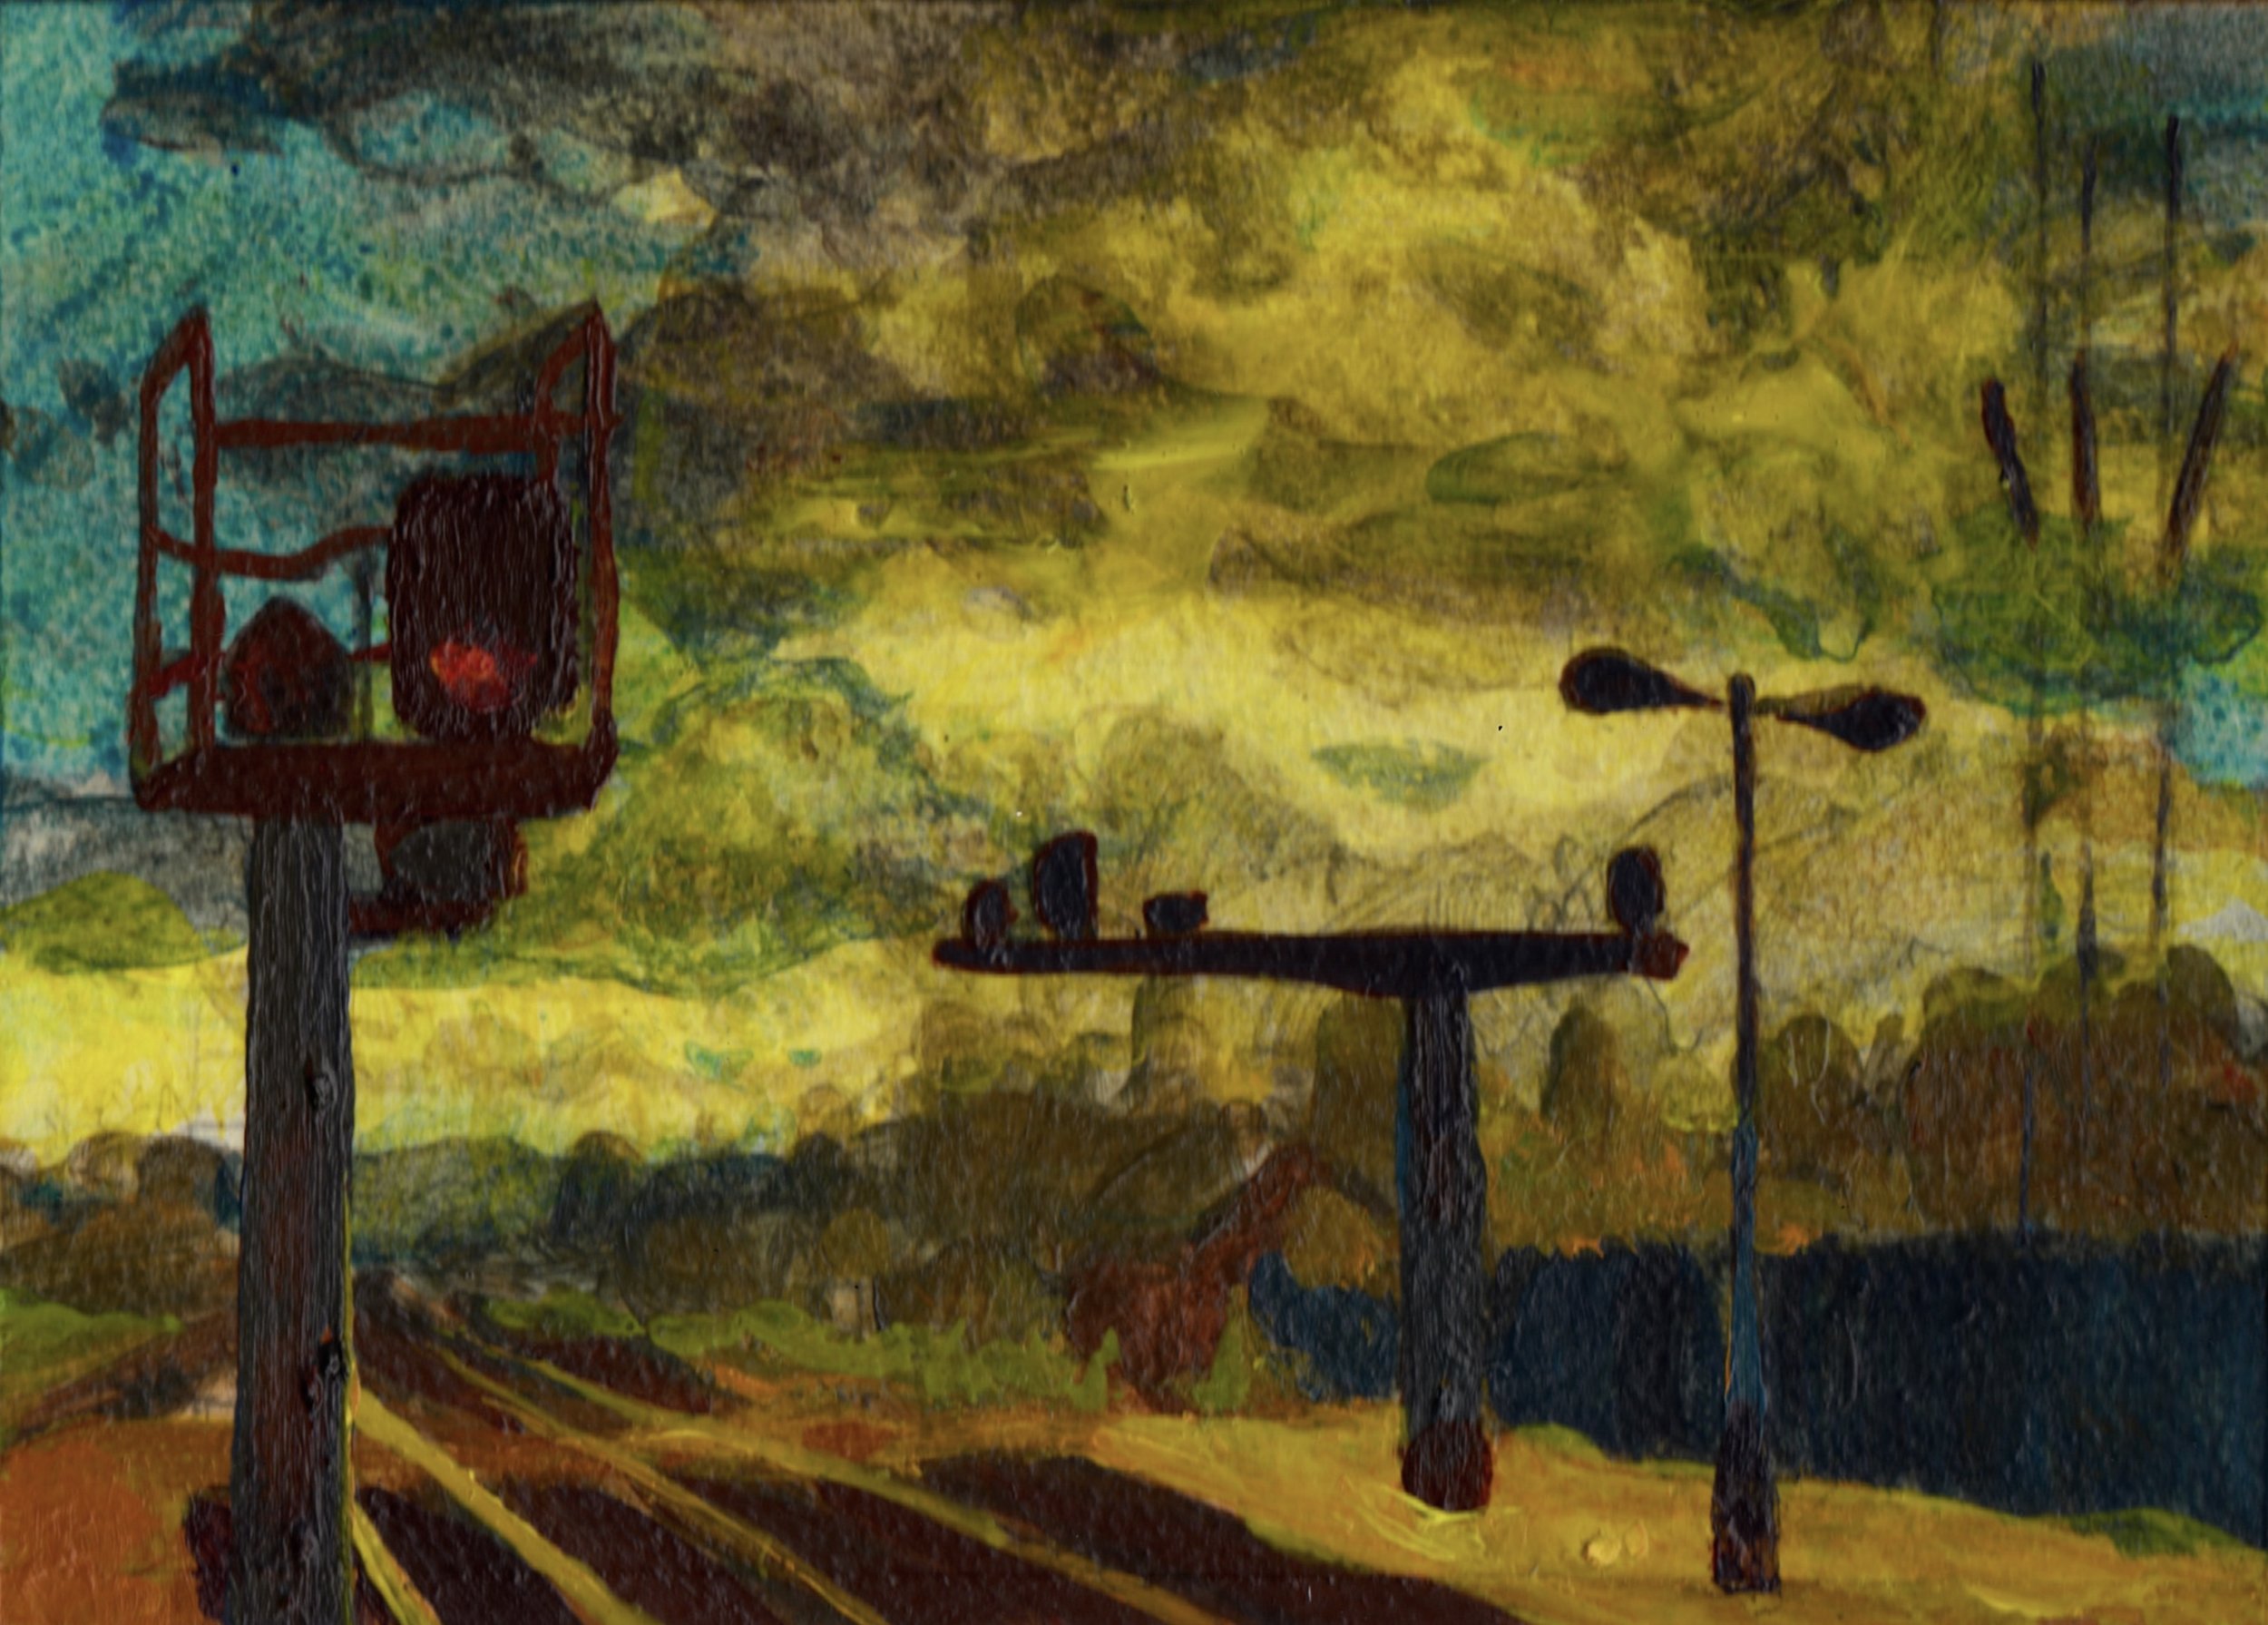 Station Painting.jpg